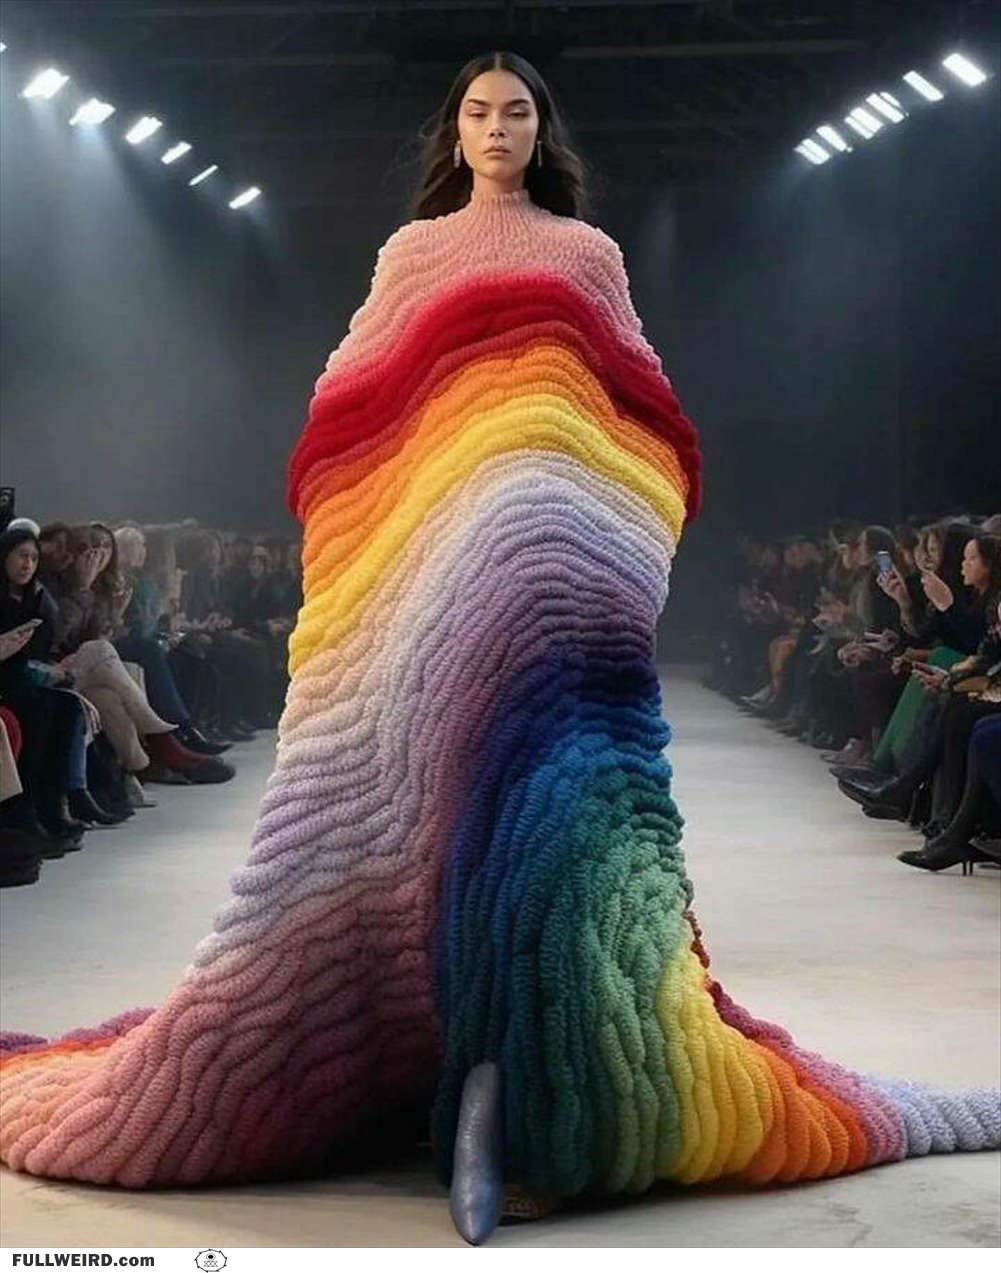 The Most Fun Blanket Dress